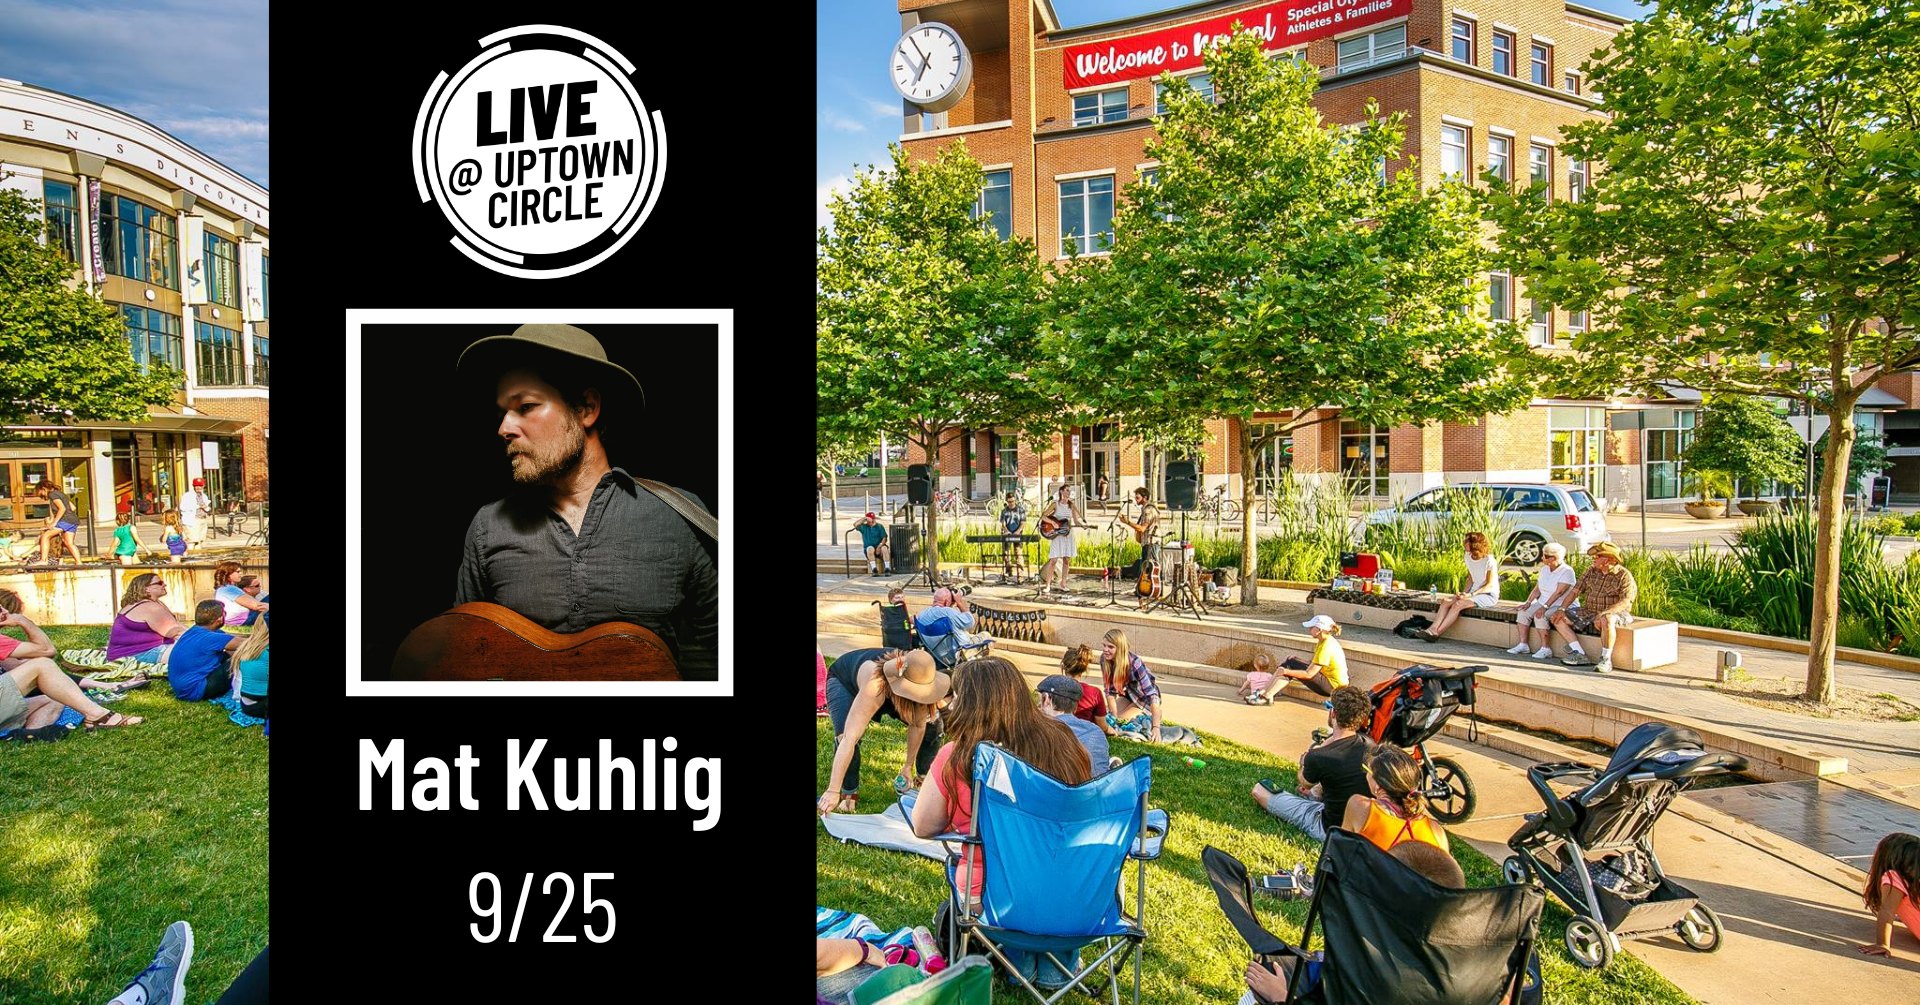 Normal LIVE presents Mat Kuhlig @ Uptown Circle